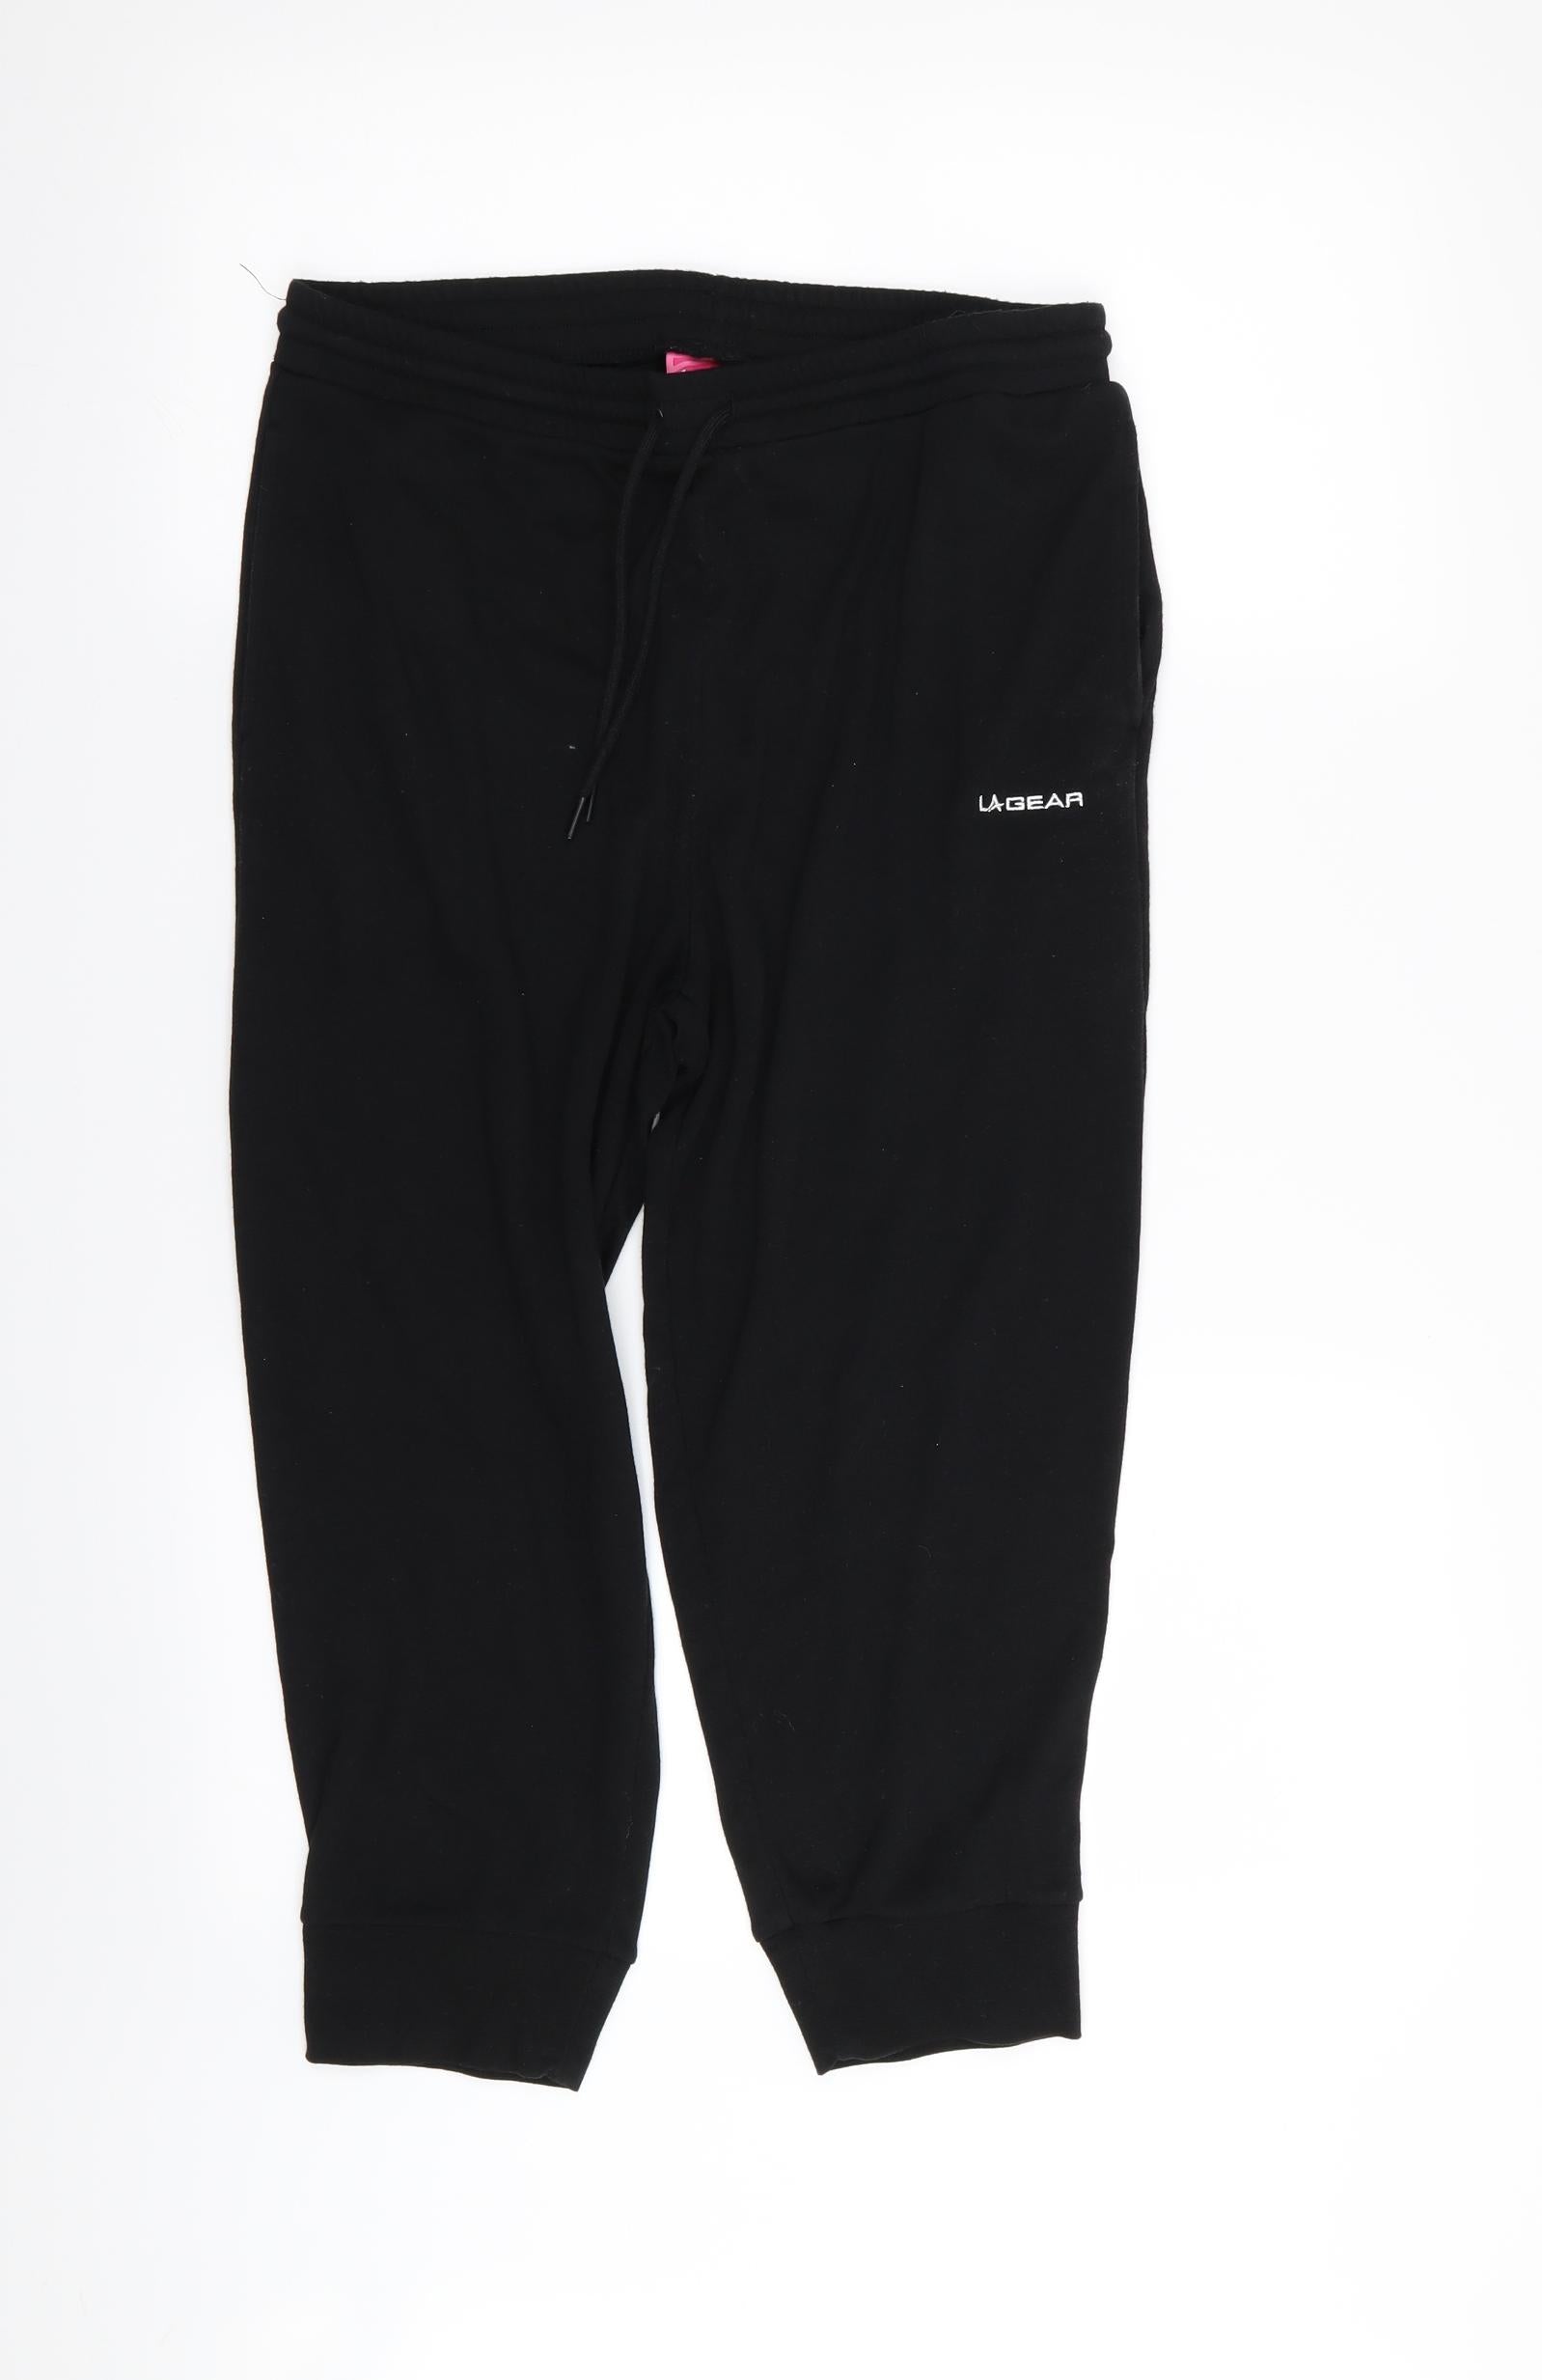 LA Gear Womens Three Quarter Capri Leggings Capris Pants Trousers Bottoms  Sports  eBay